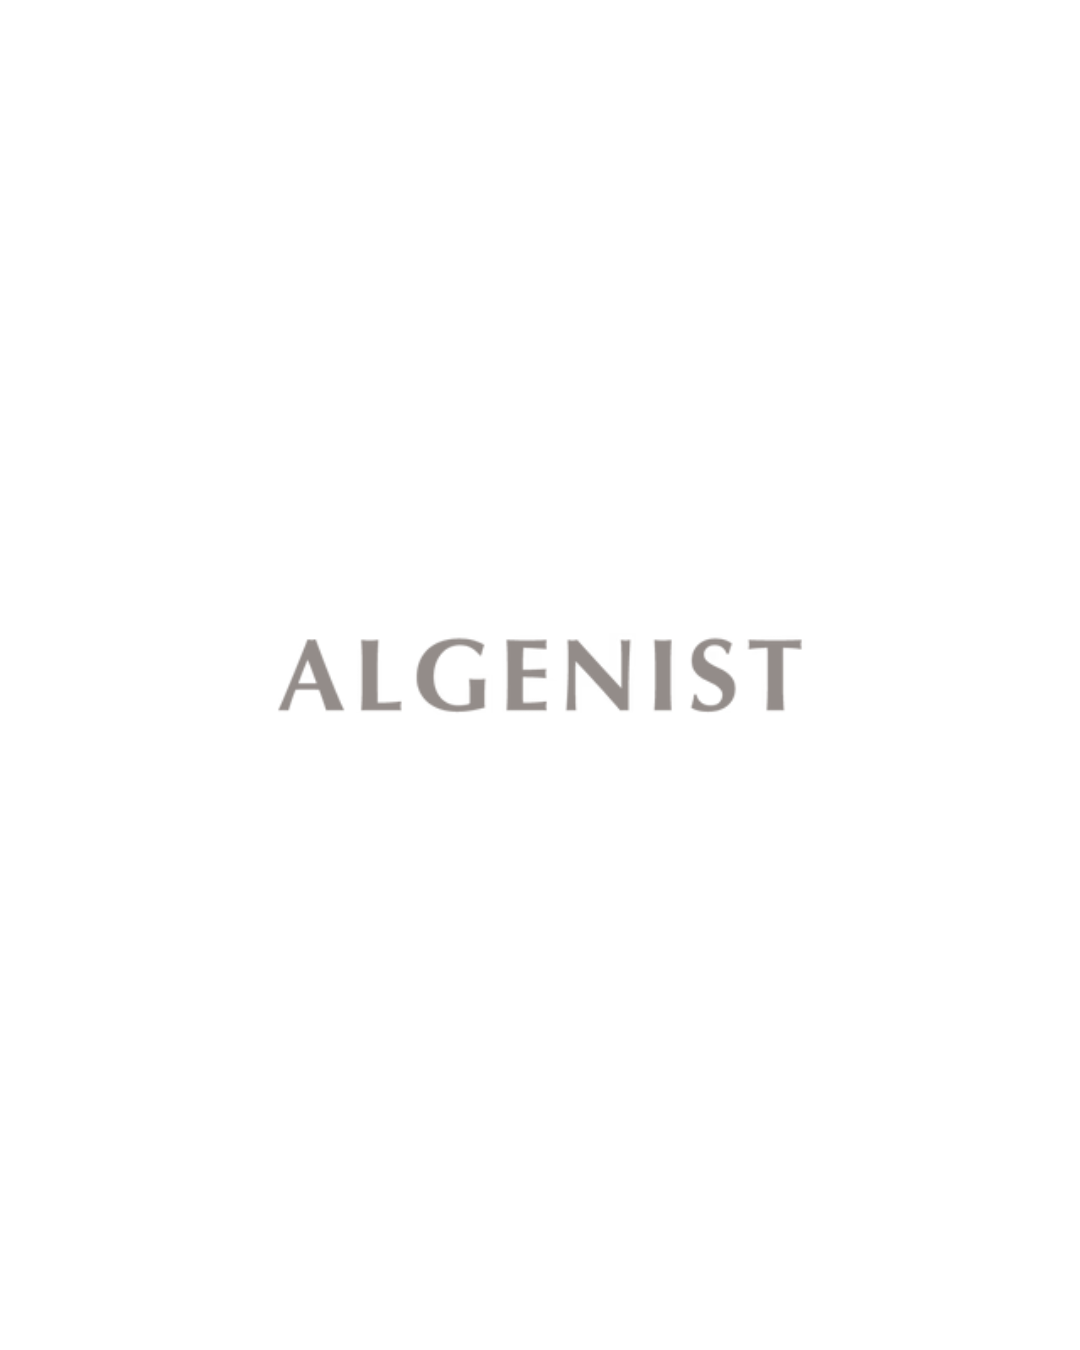 Algenist Logo